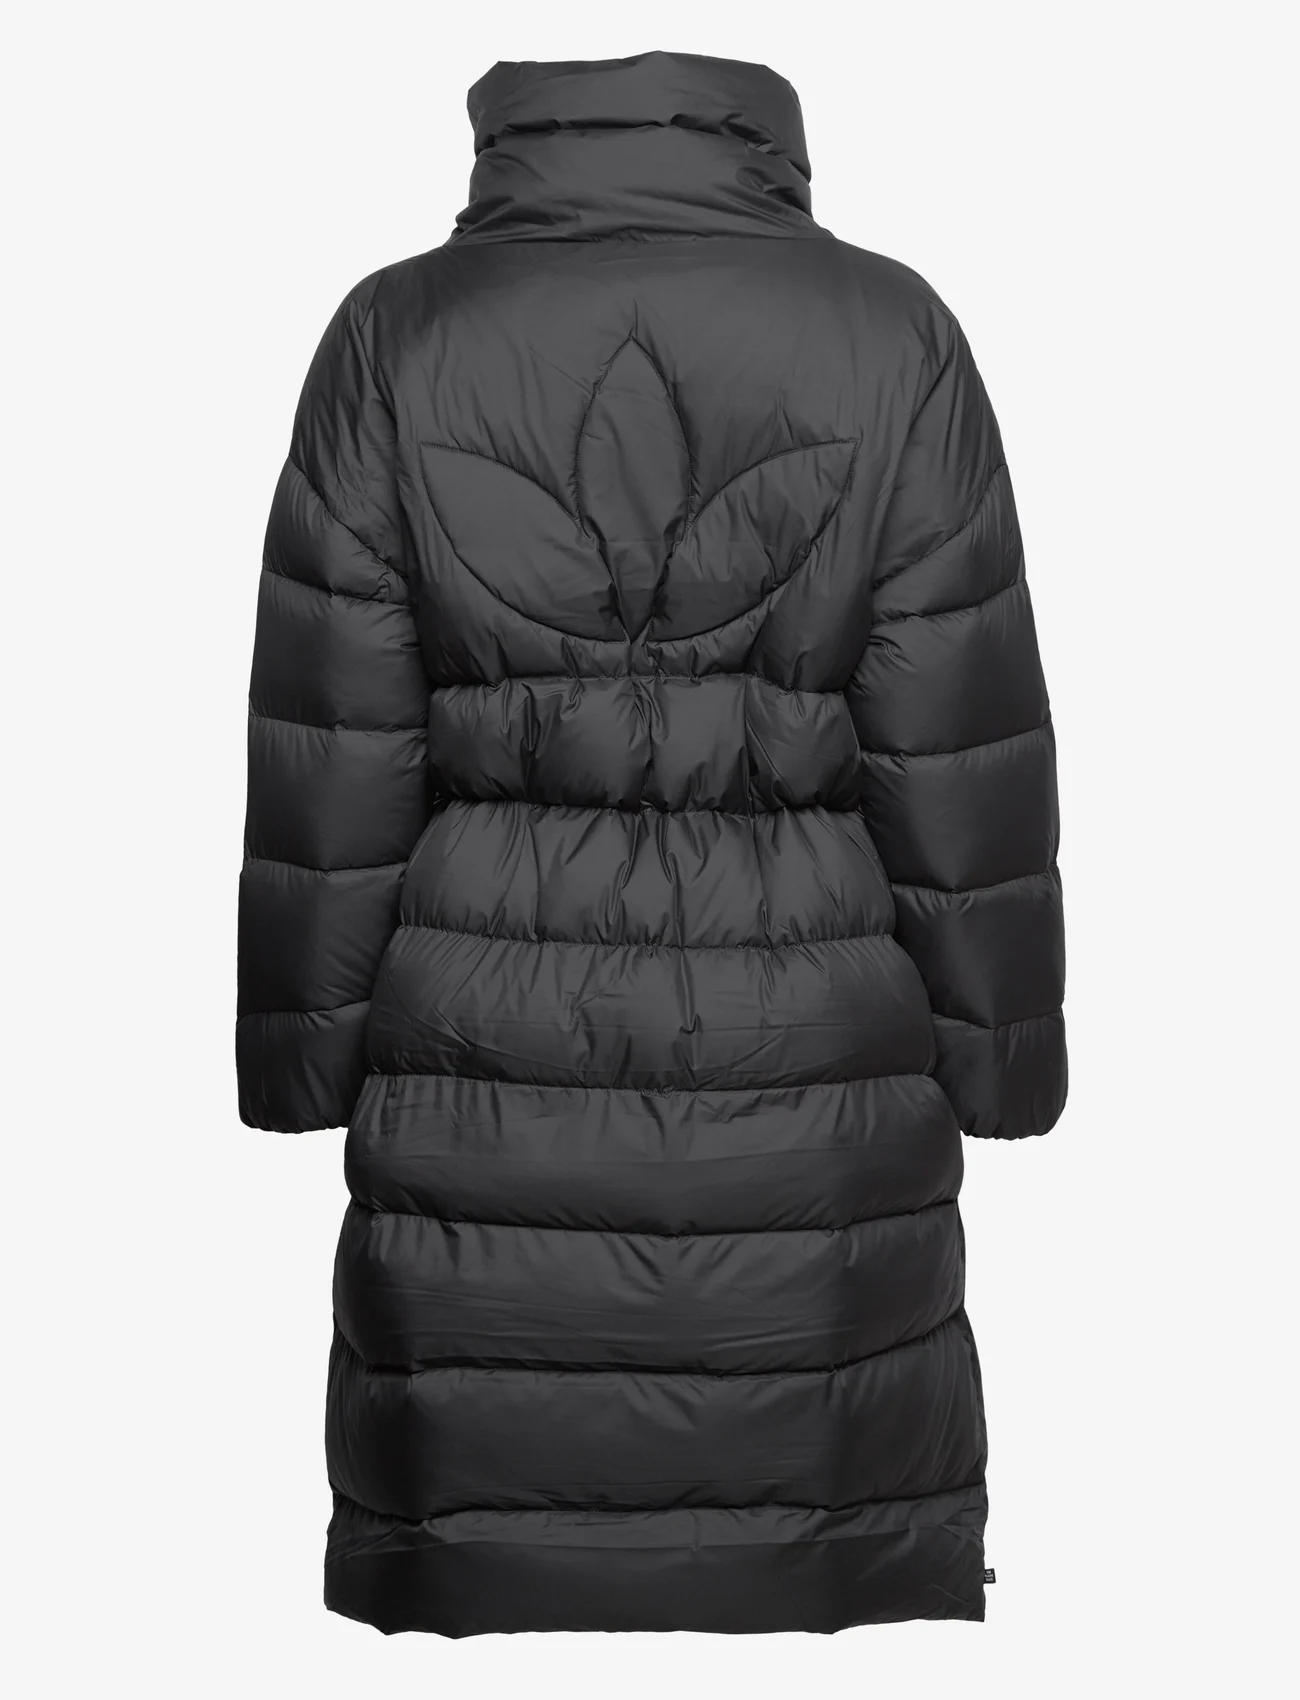 adidas Originals - Fashion Down Jacket - winter coats - black - 1